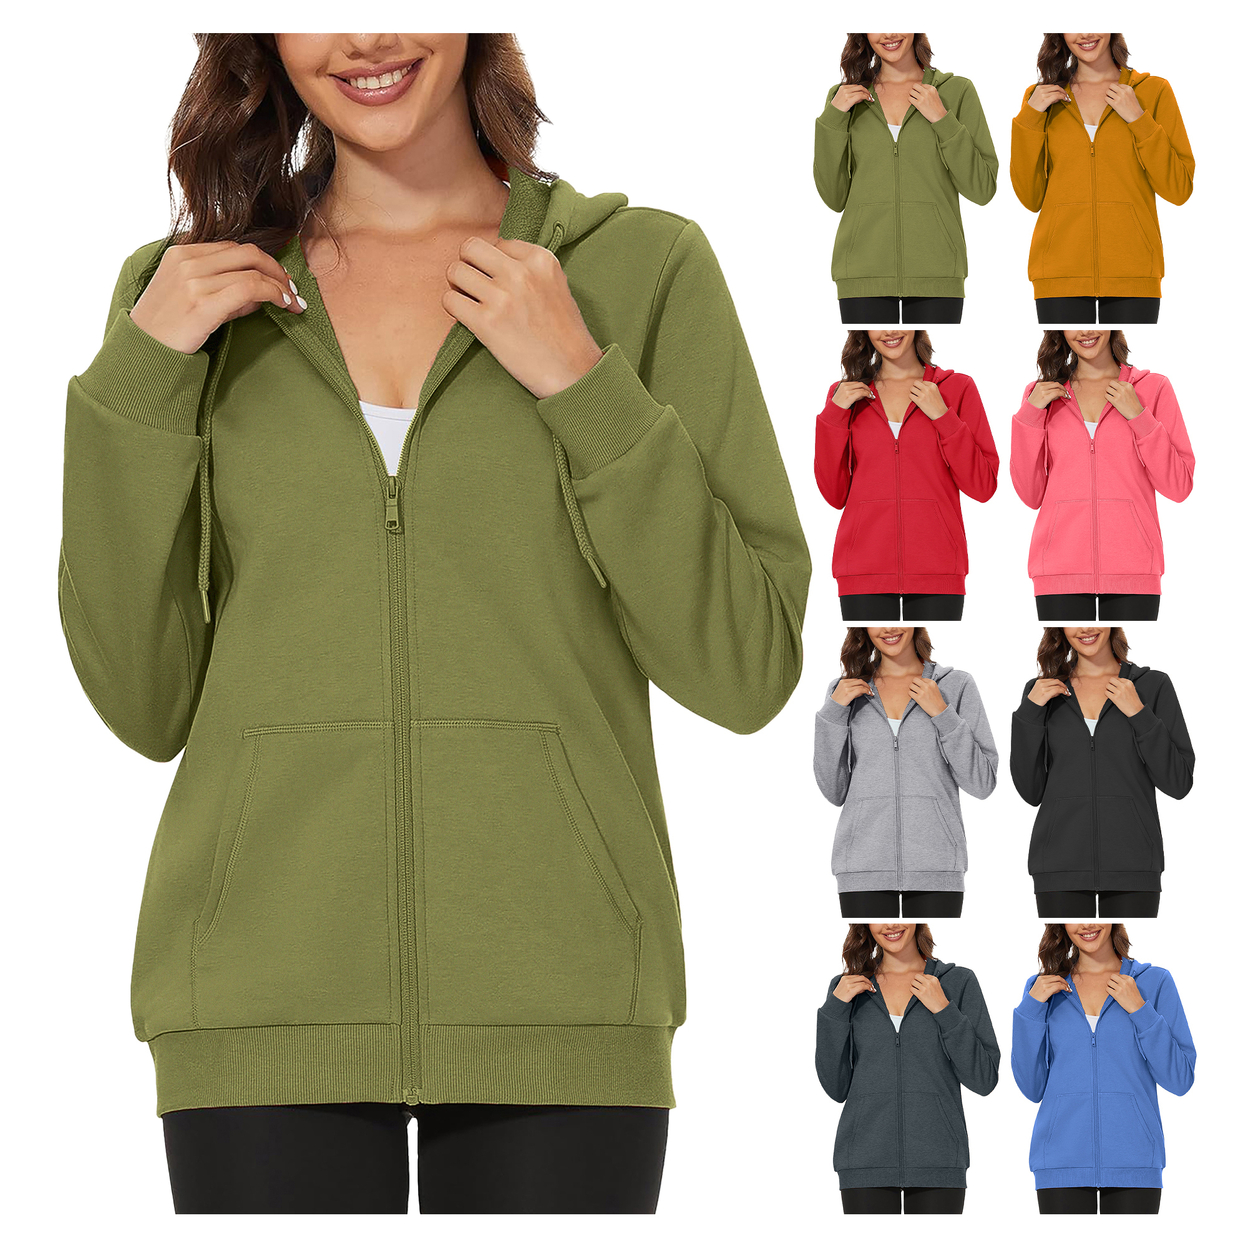 2-Pack: Women's Winter Warm Soft Blend Fleece Lined Full Zip Up Hoodie - Black & Black, Xx-large